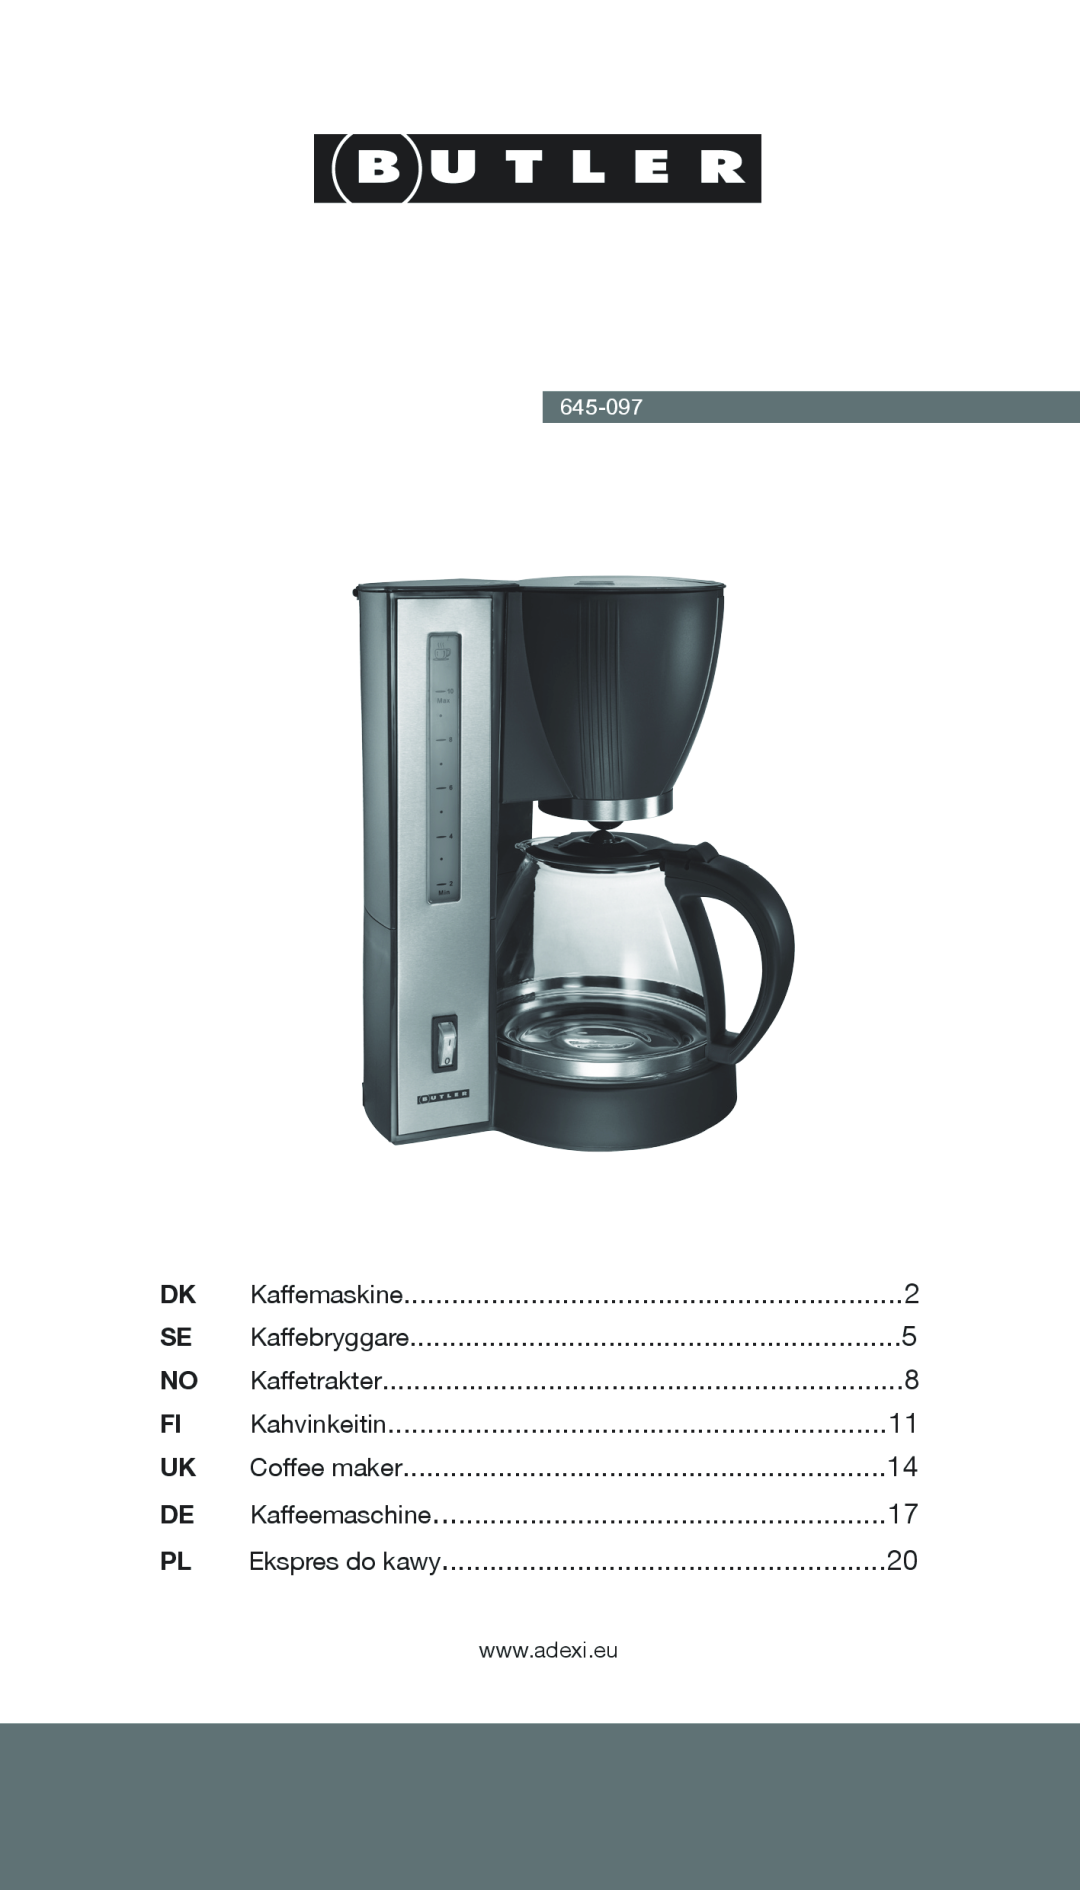 Melissa 645-097 manual Kaffemaskine, Kaffebryggare, Kaffetrakter, Kahvinkeitin, Coffee maker, Kaffeemaschine 